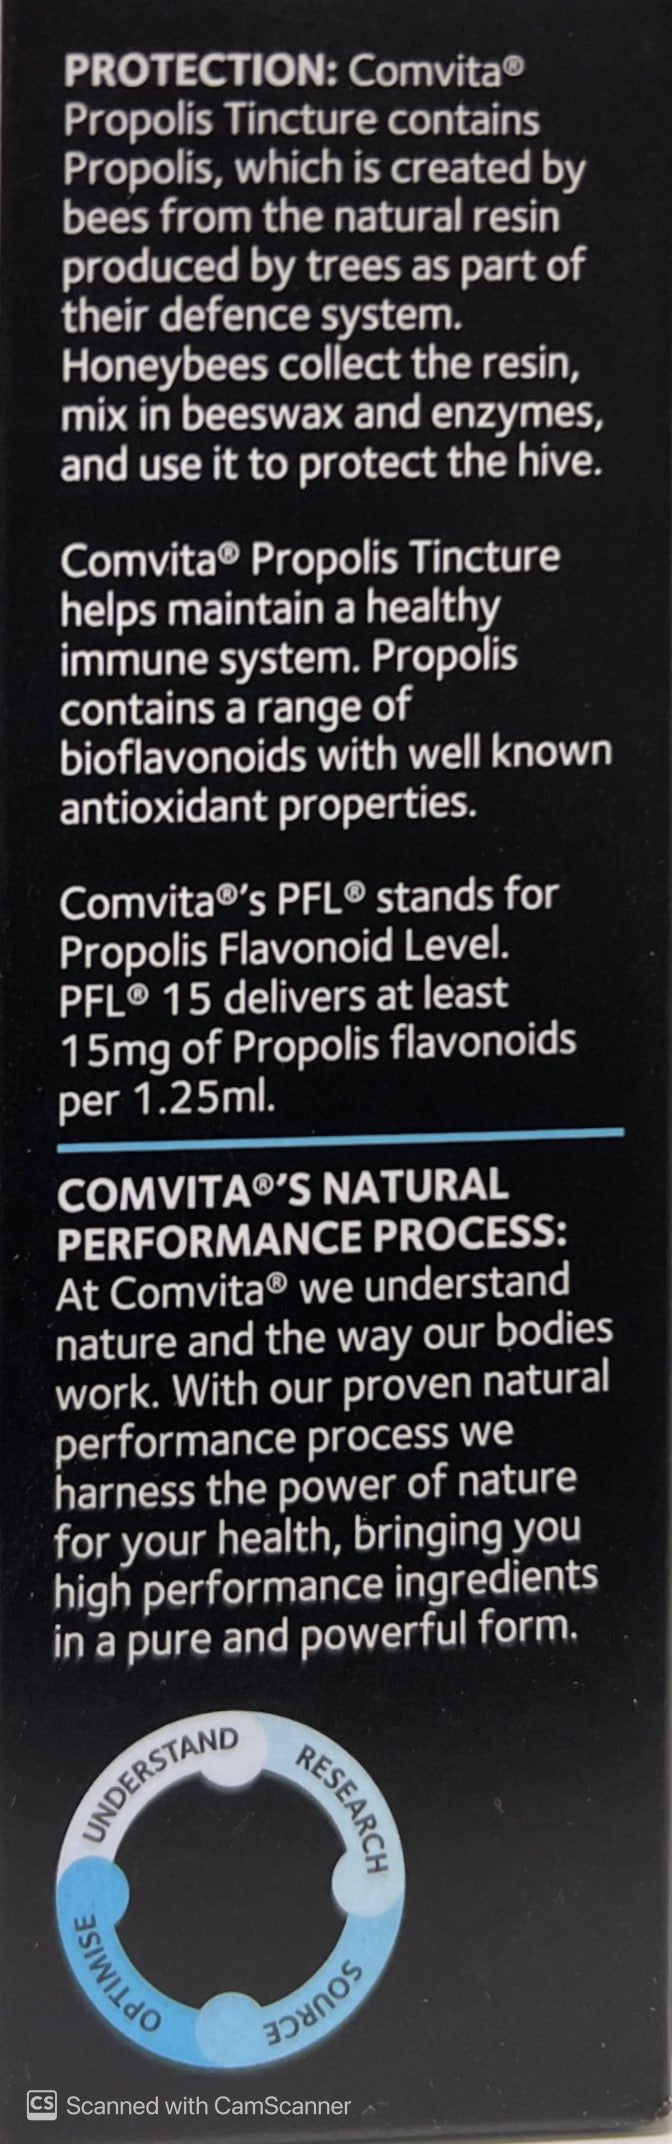 Comvita Propolis tincture pfl15 25 ml